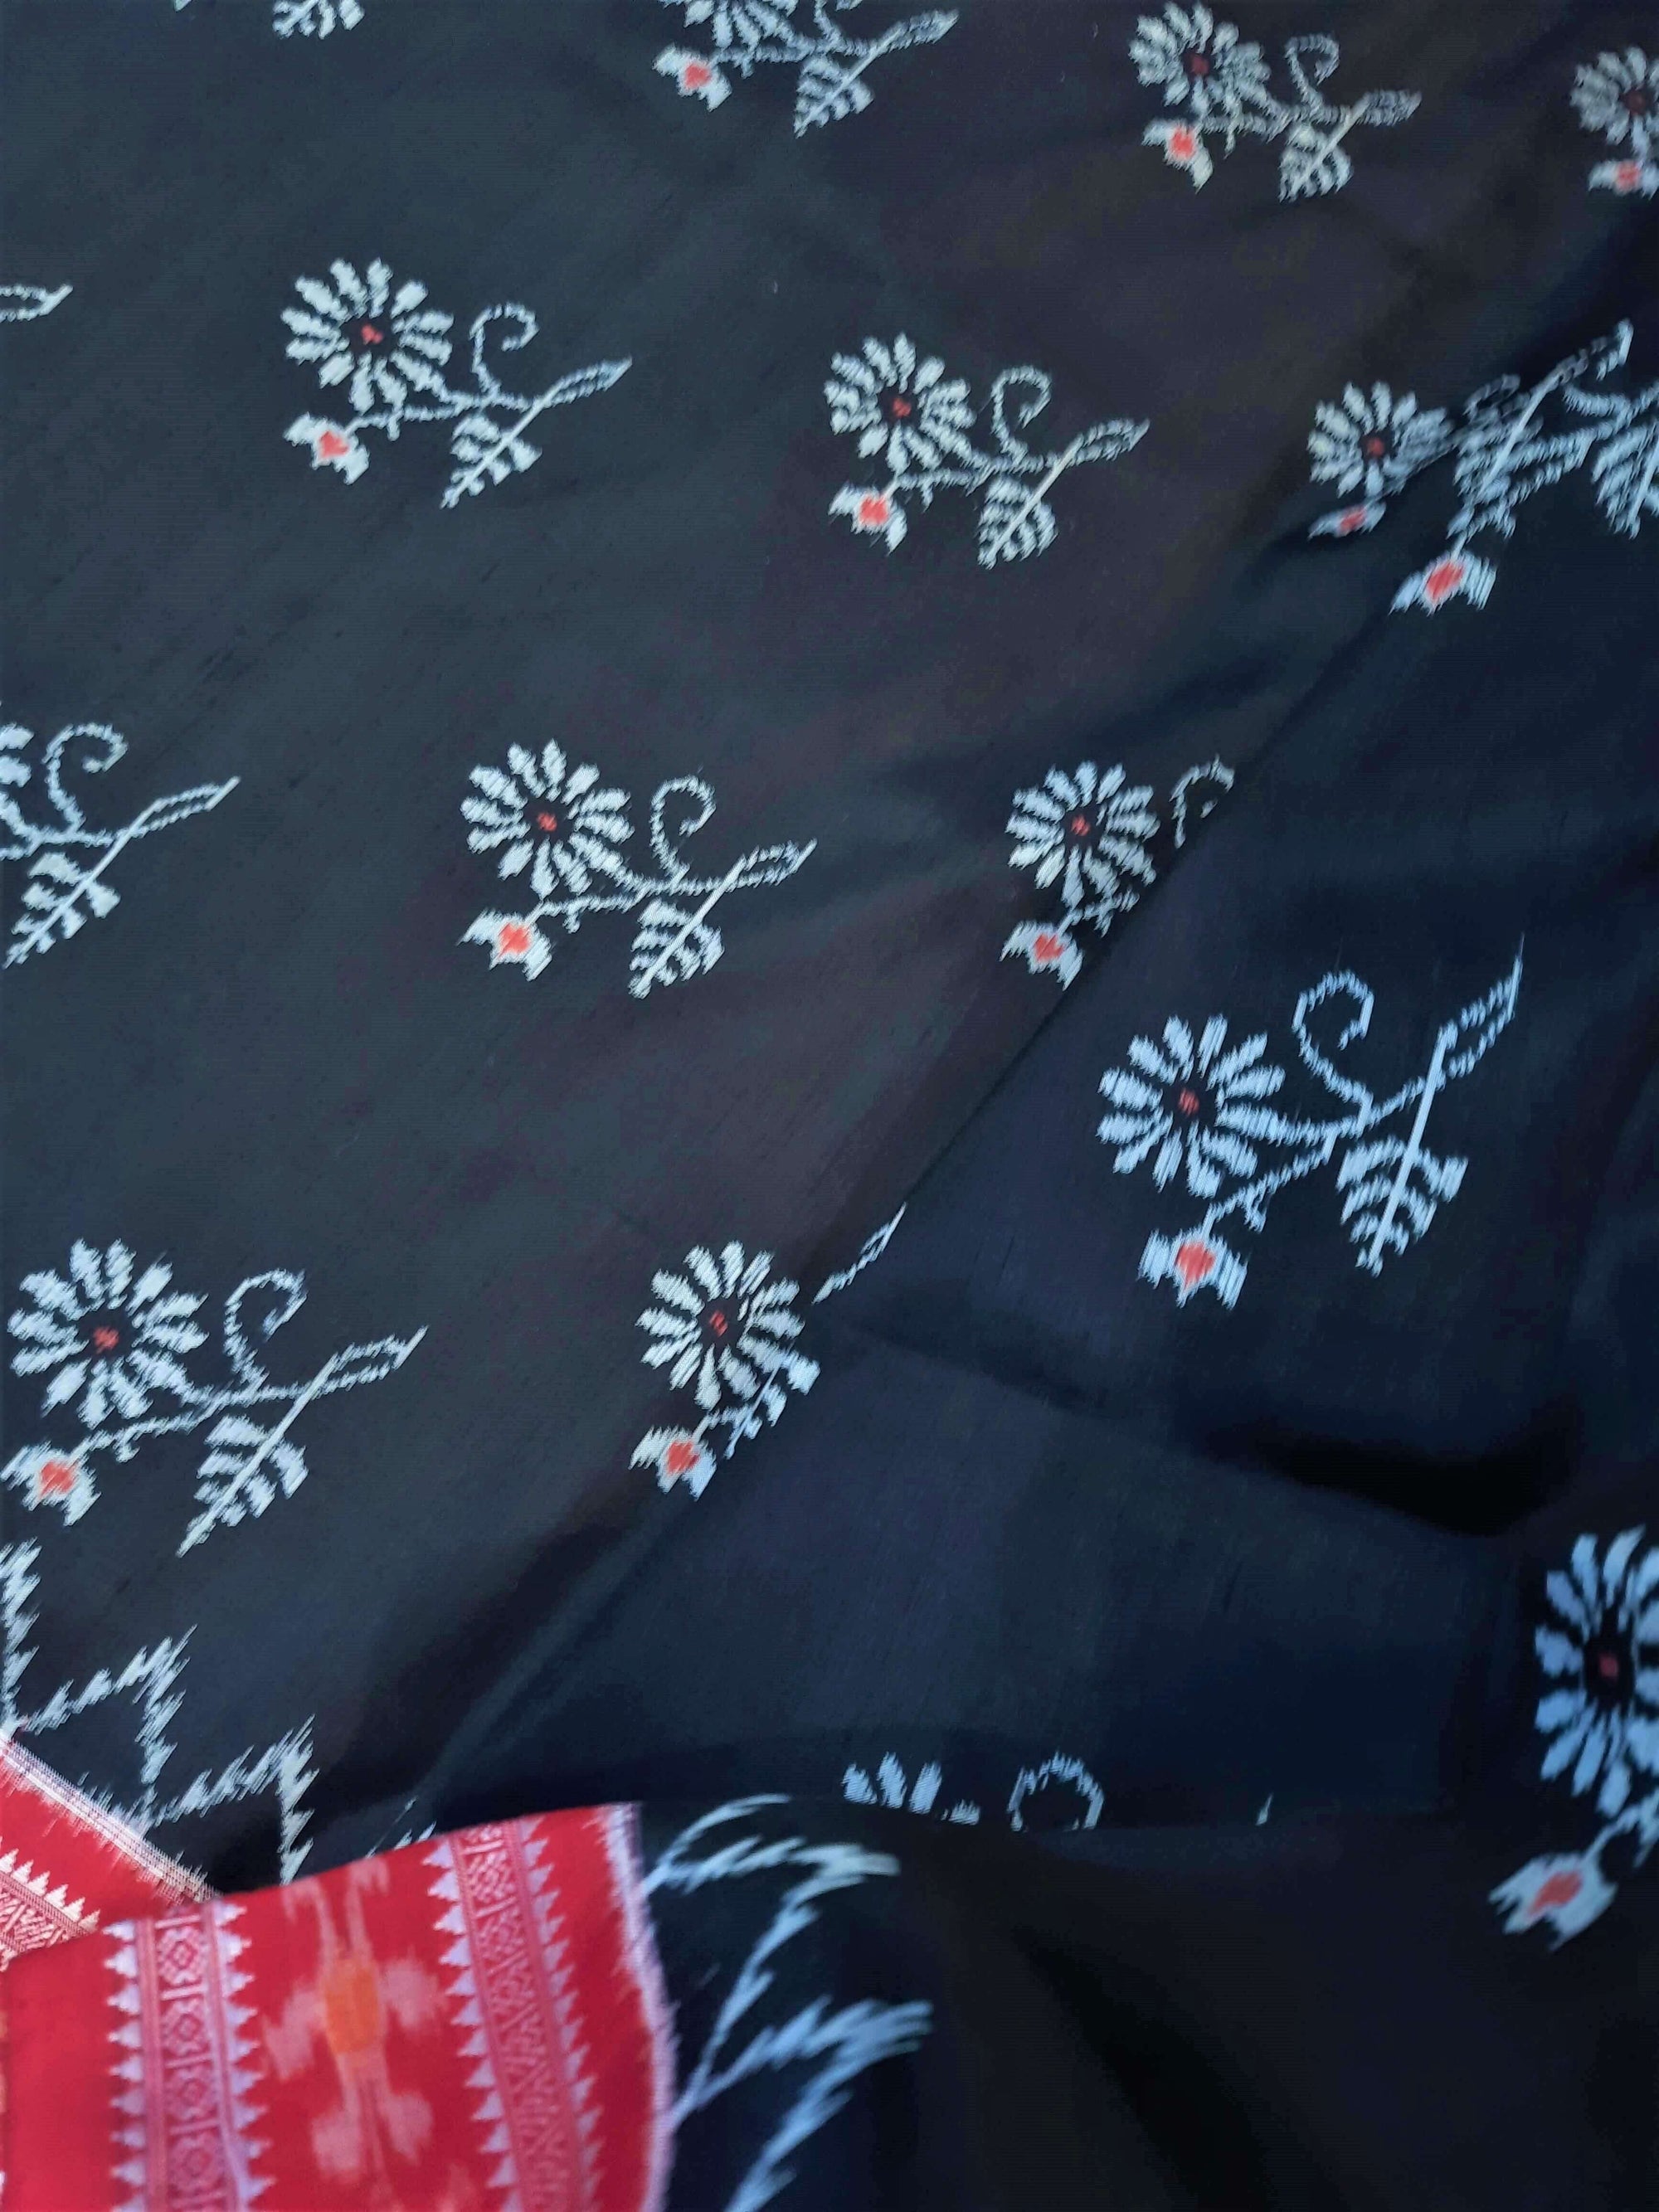 Black Odisha Khandua Silk Saree with woven flowers across body